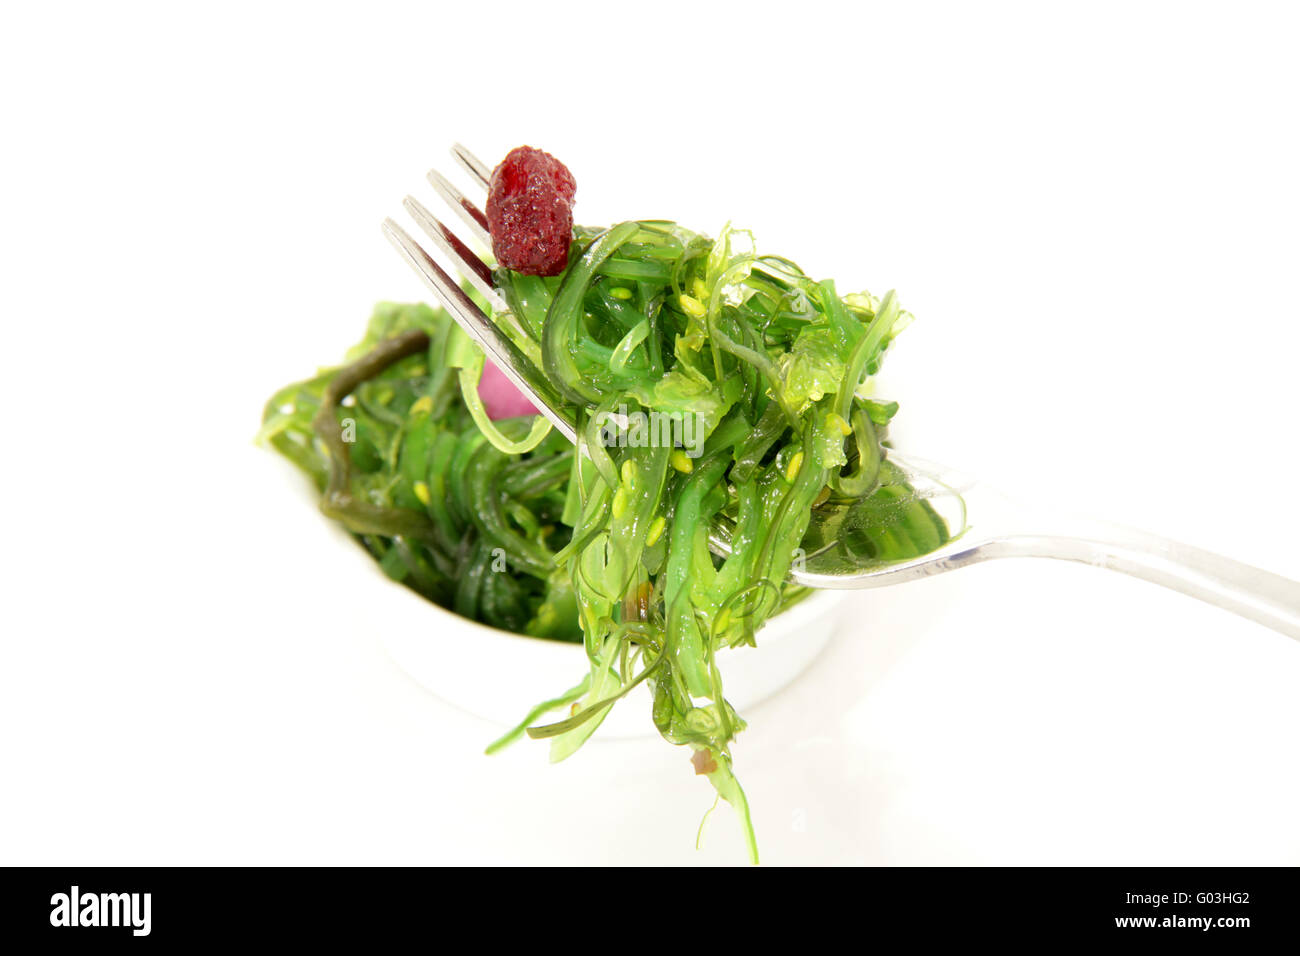 seaweed salad Stock Photo